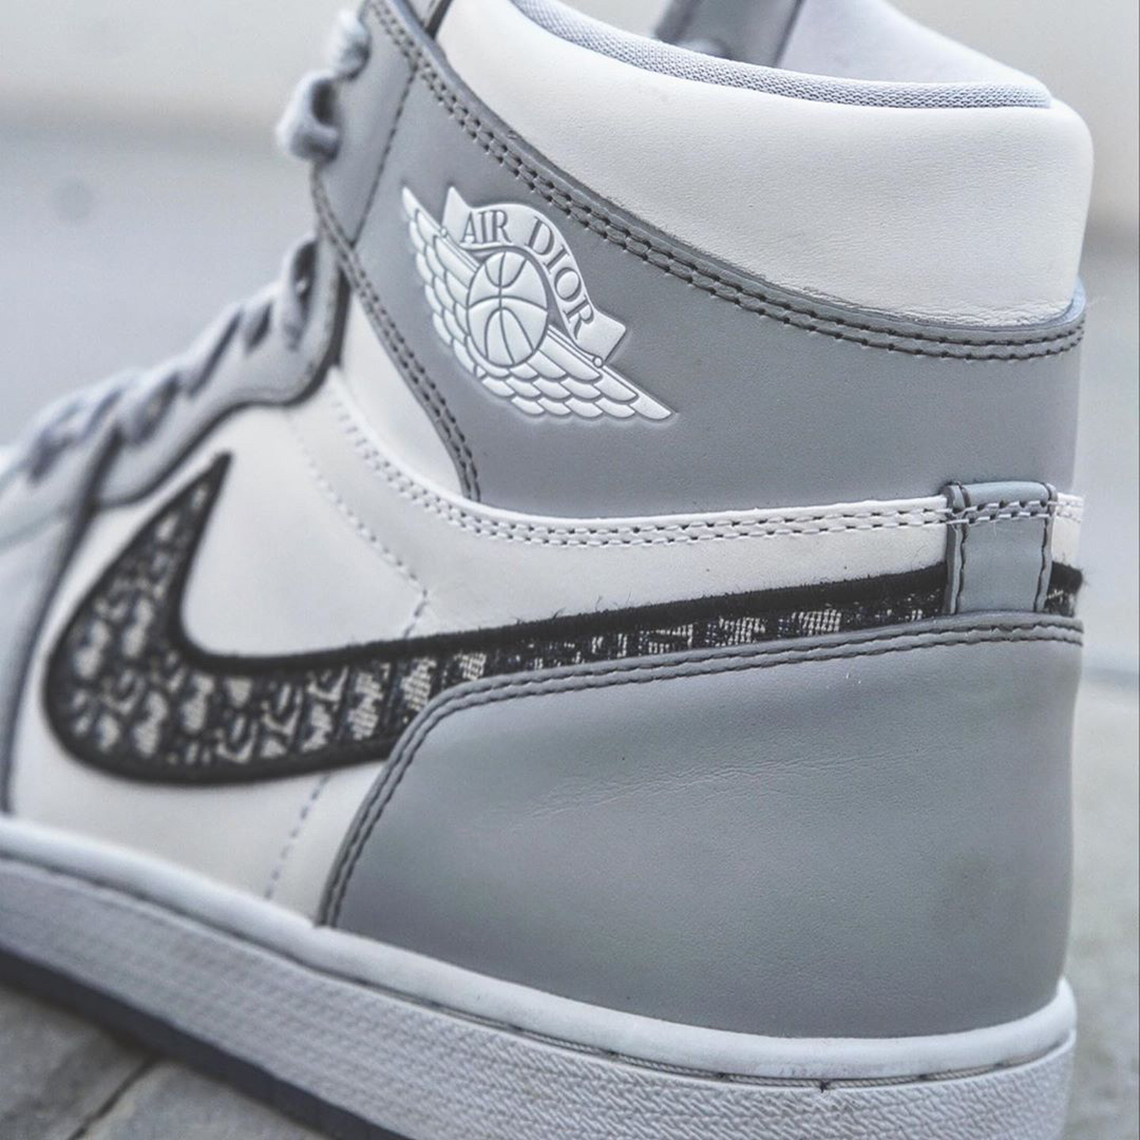 Dior Air Jordan 1 High Photos + Release Info | SneakerNews.com